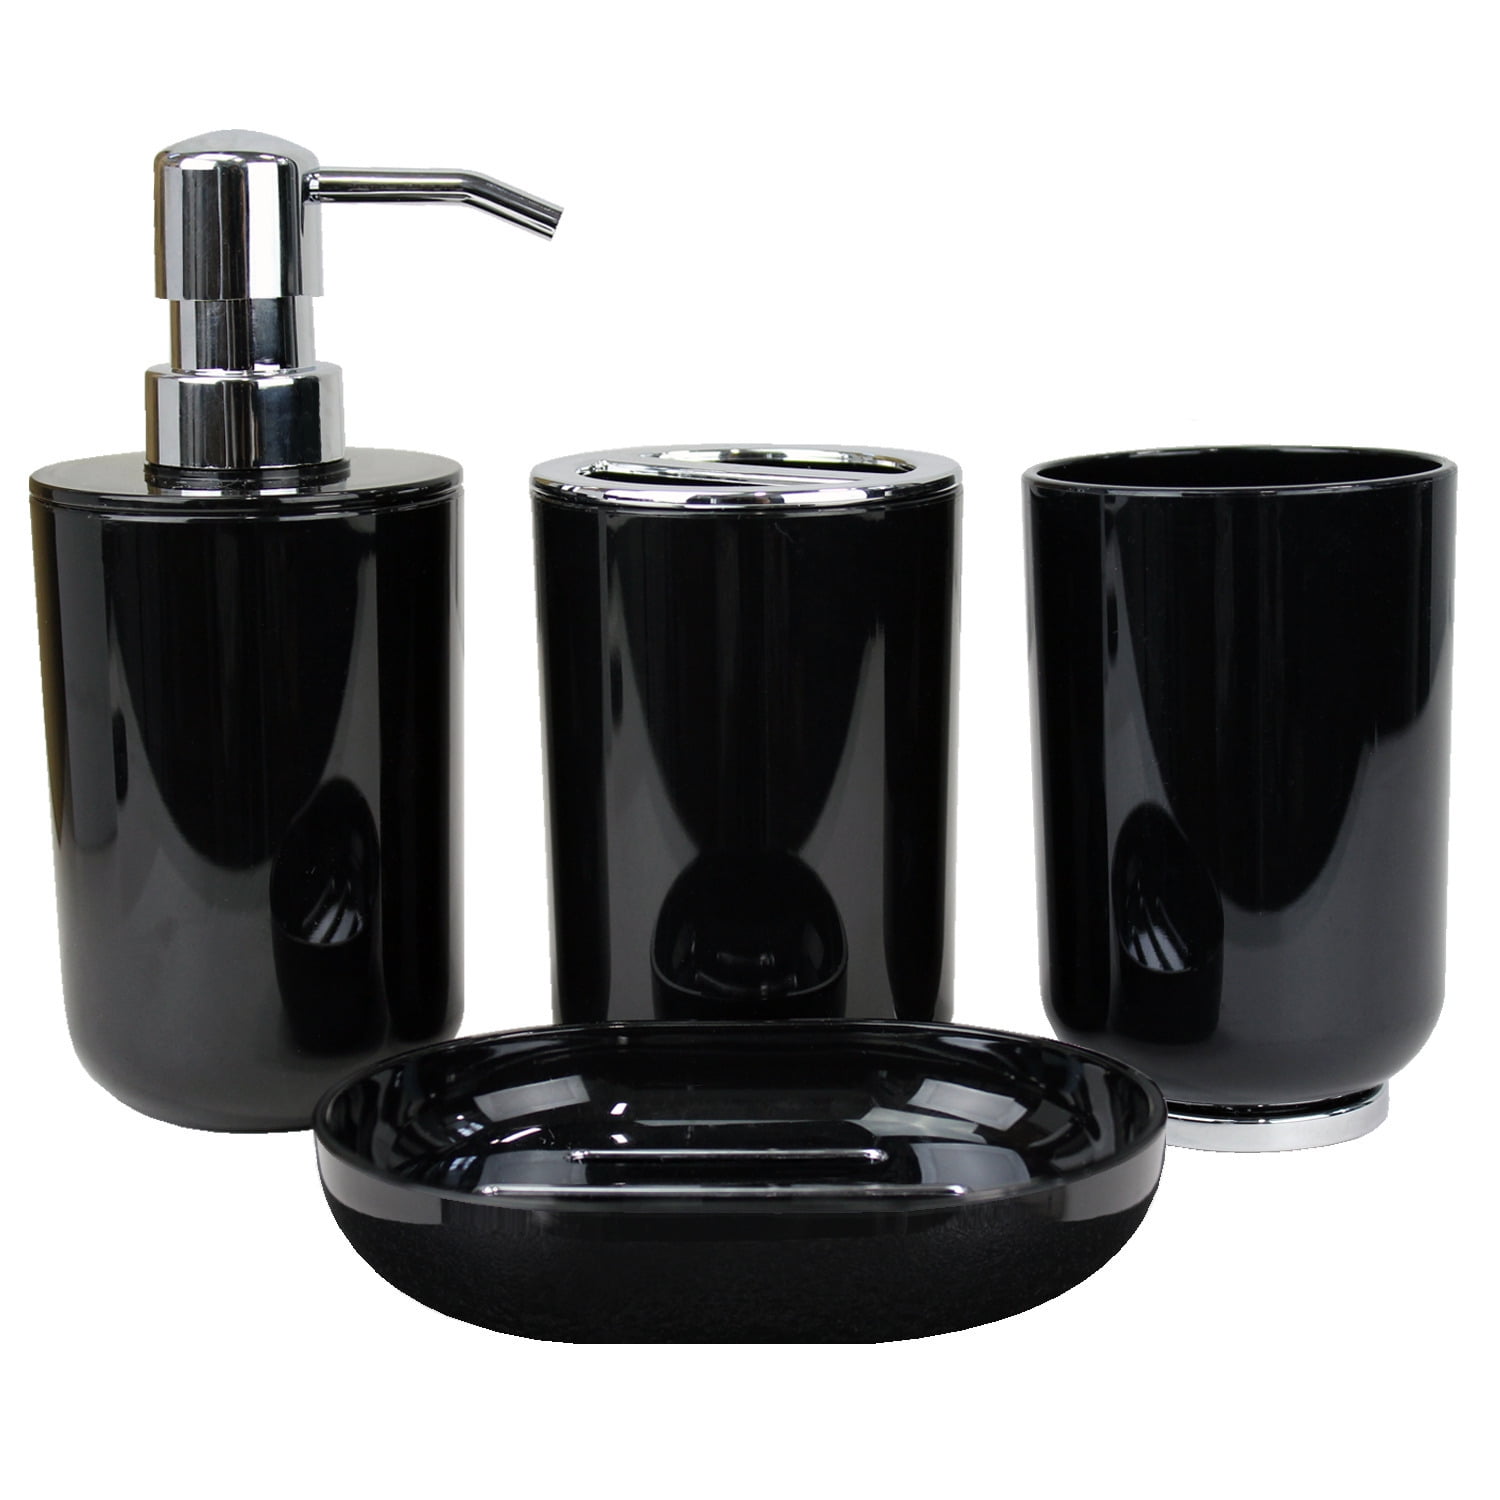 4 PIECE BATHROOM SET SOAP DISH SOAP DISPENSER TOOTHBRUSH HOLDERS PLASTIC 